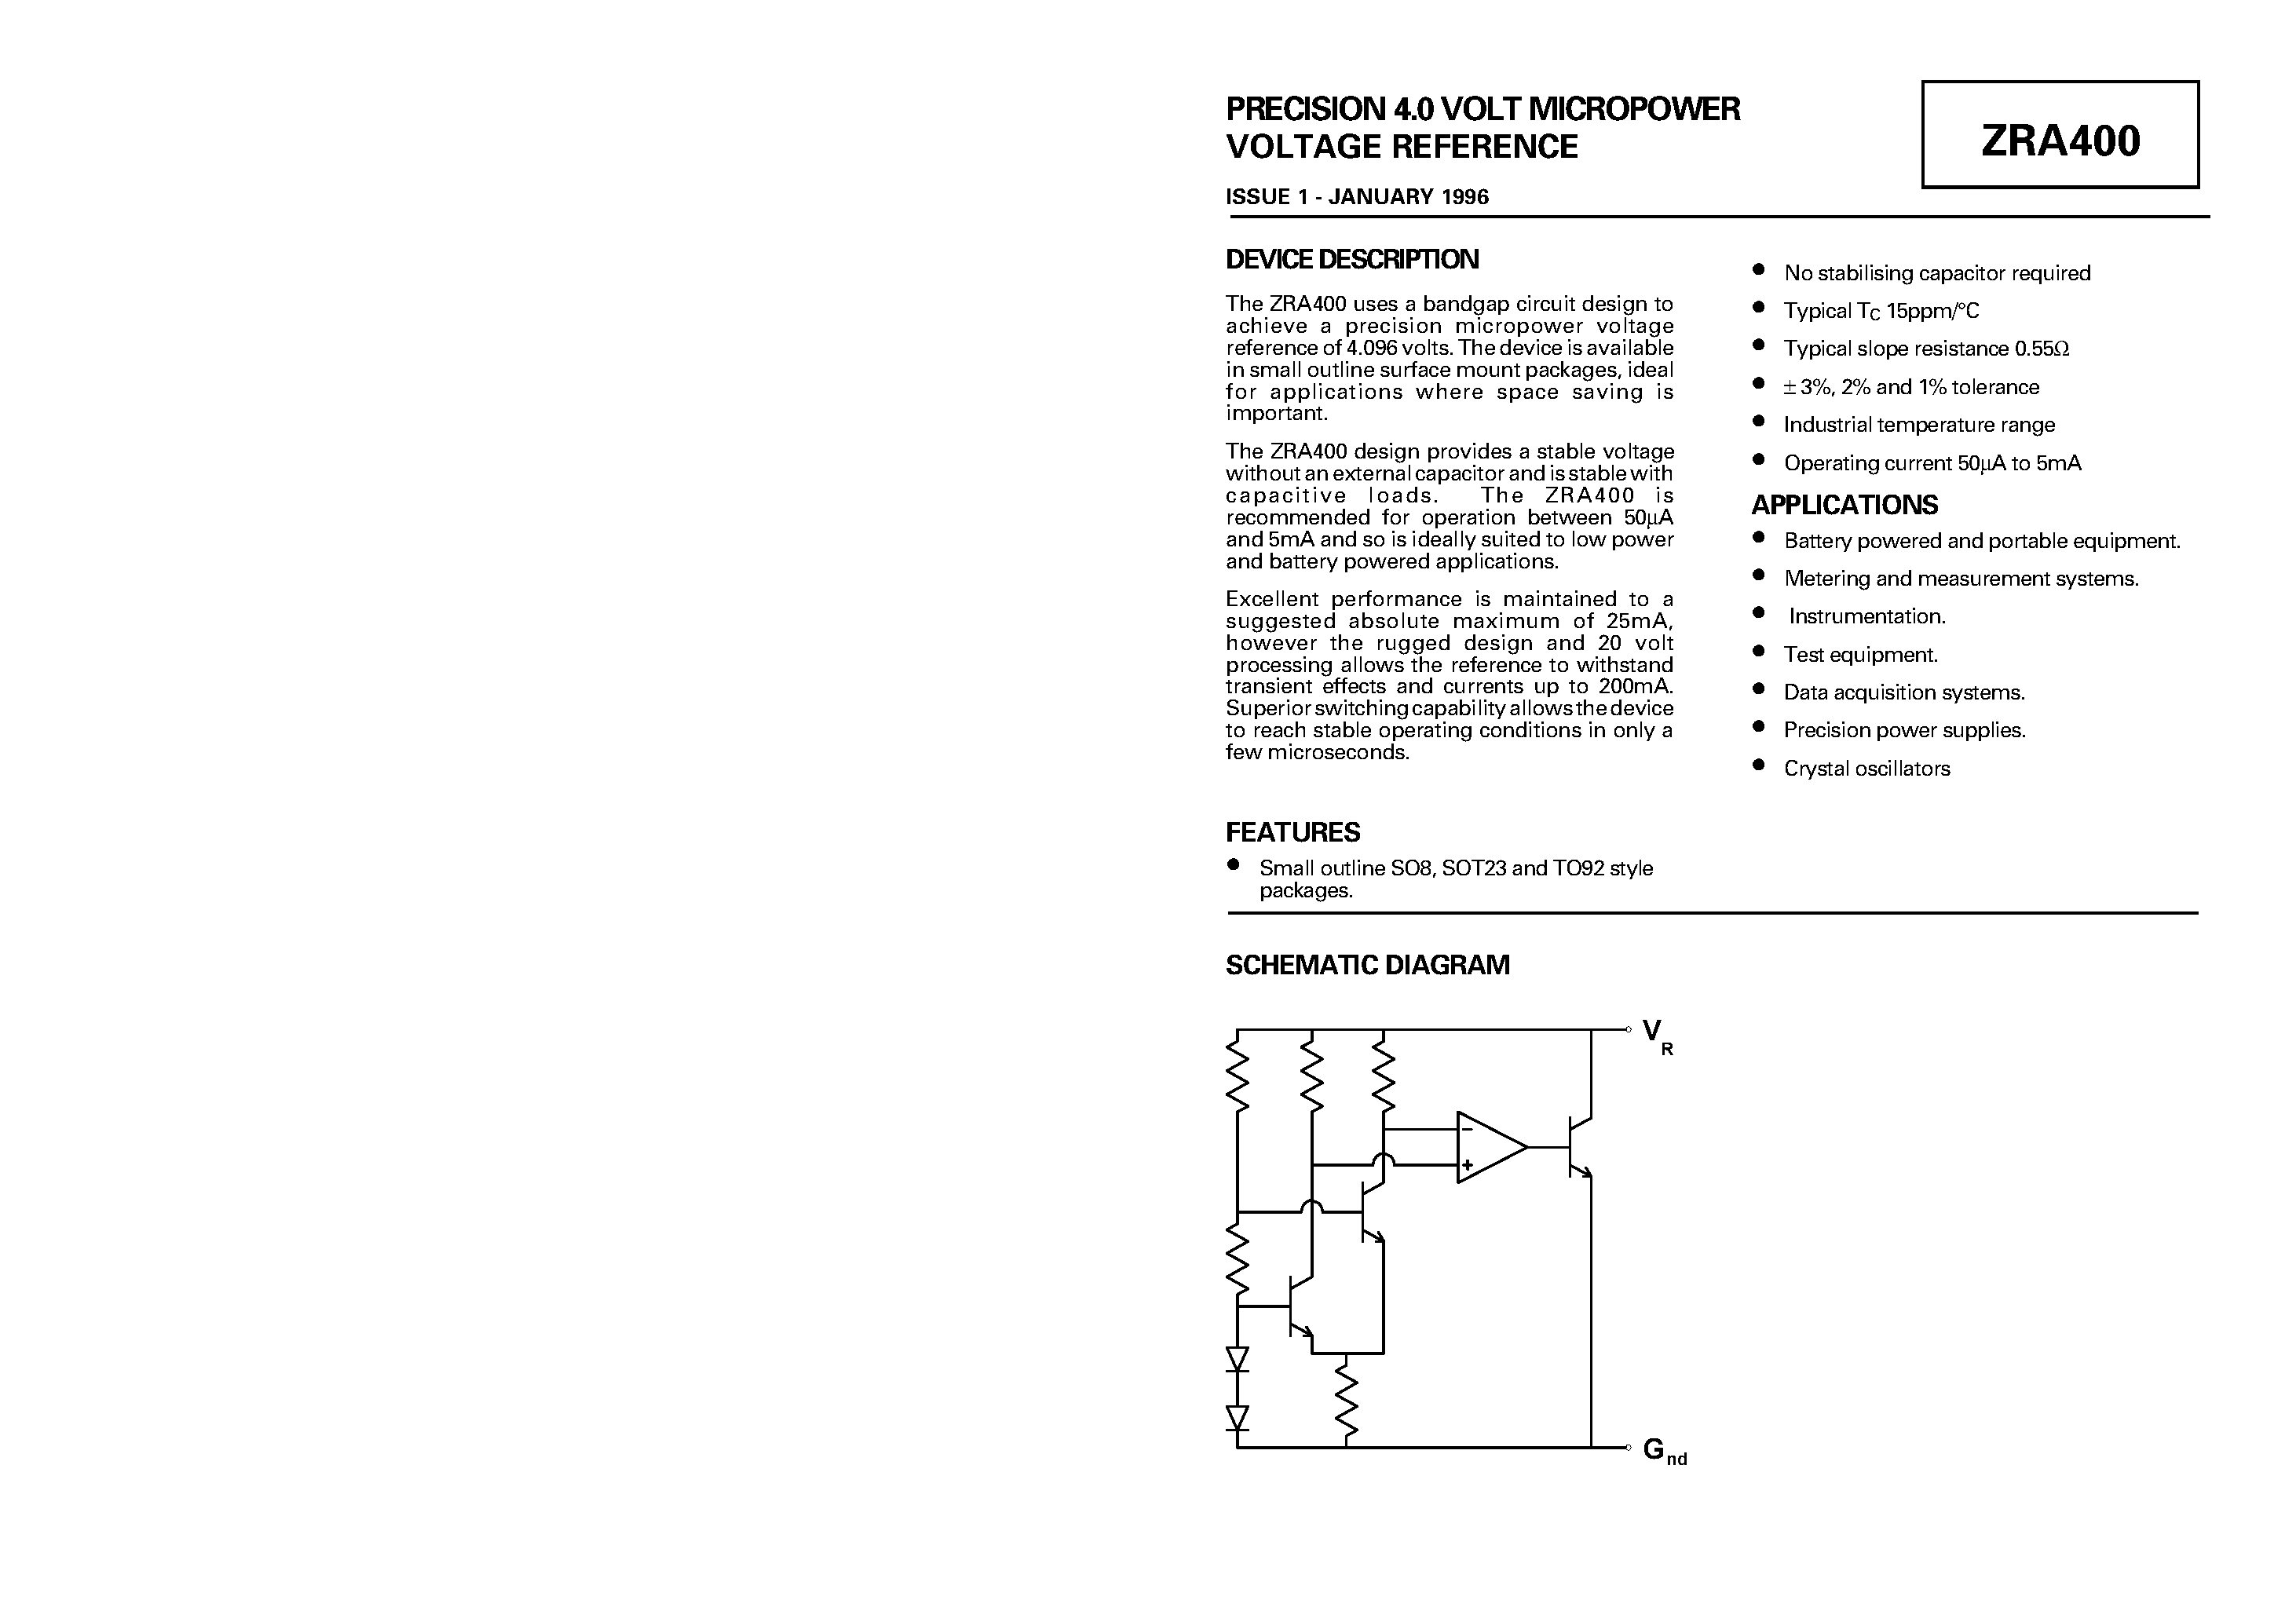 Datasheet ZRA400F02 - PRECISION 4.0 VOLT MICROPOWER page 1